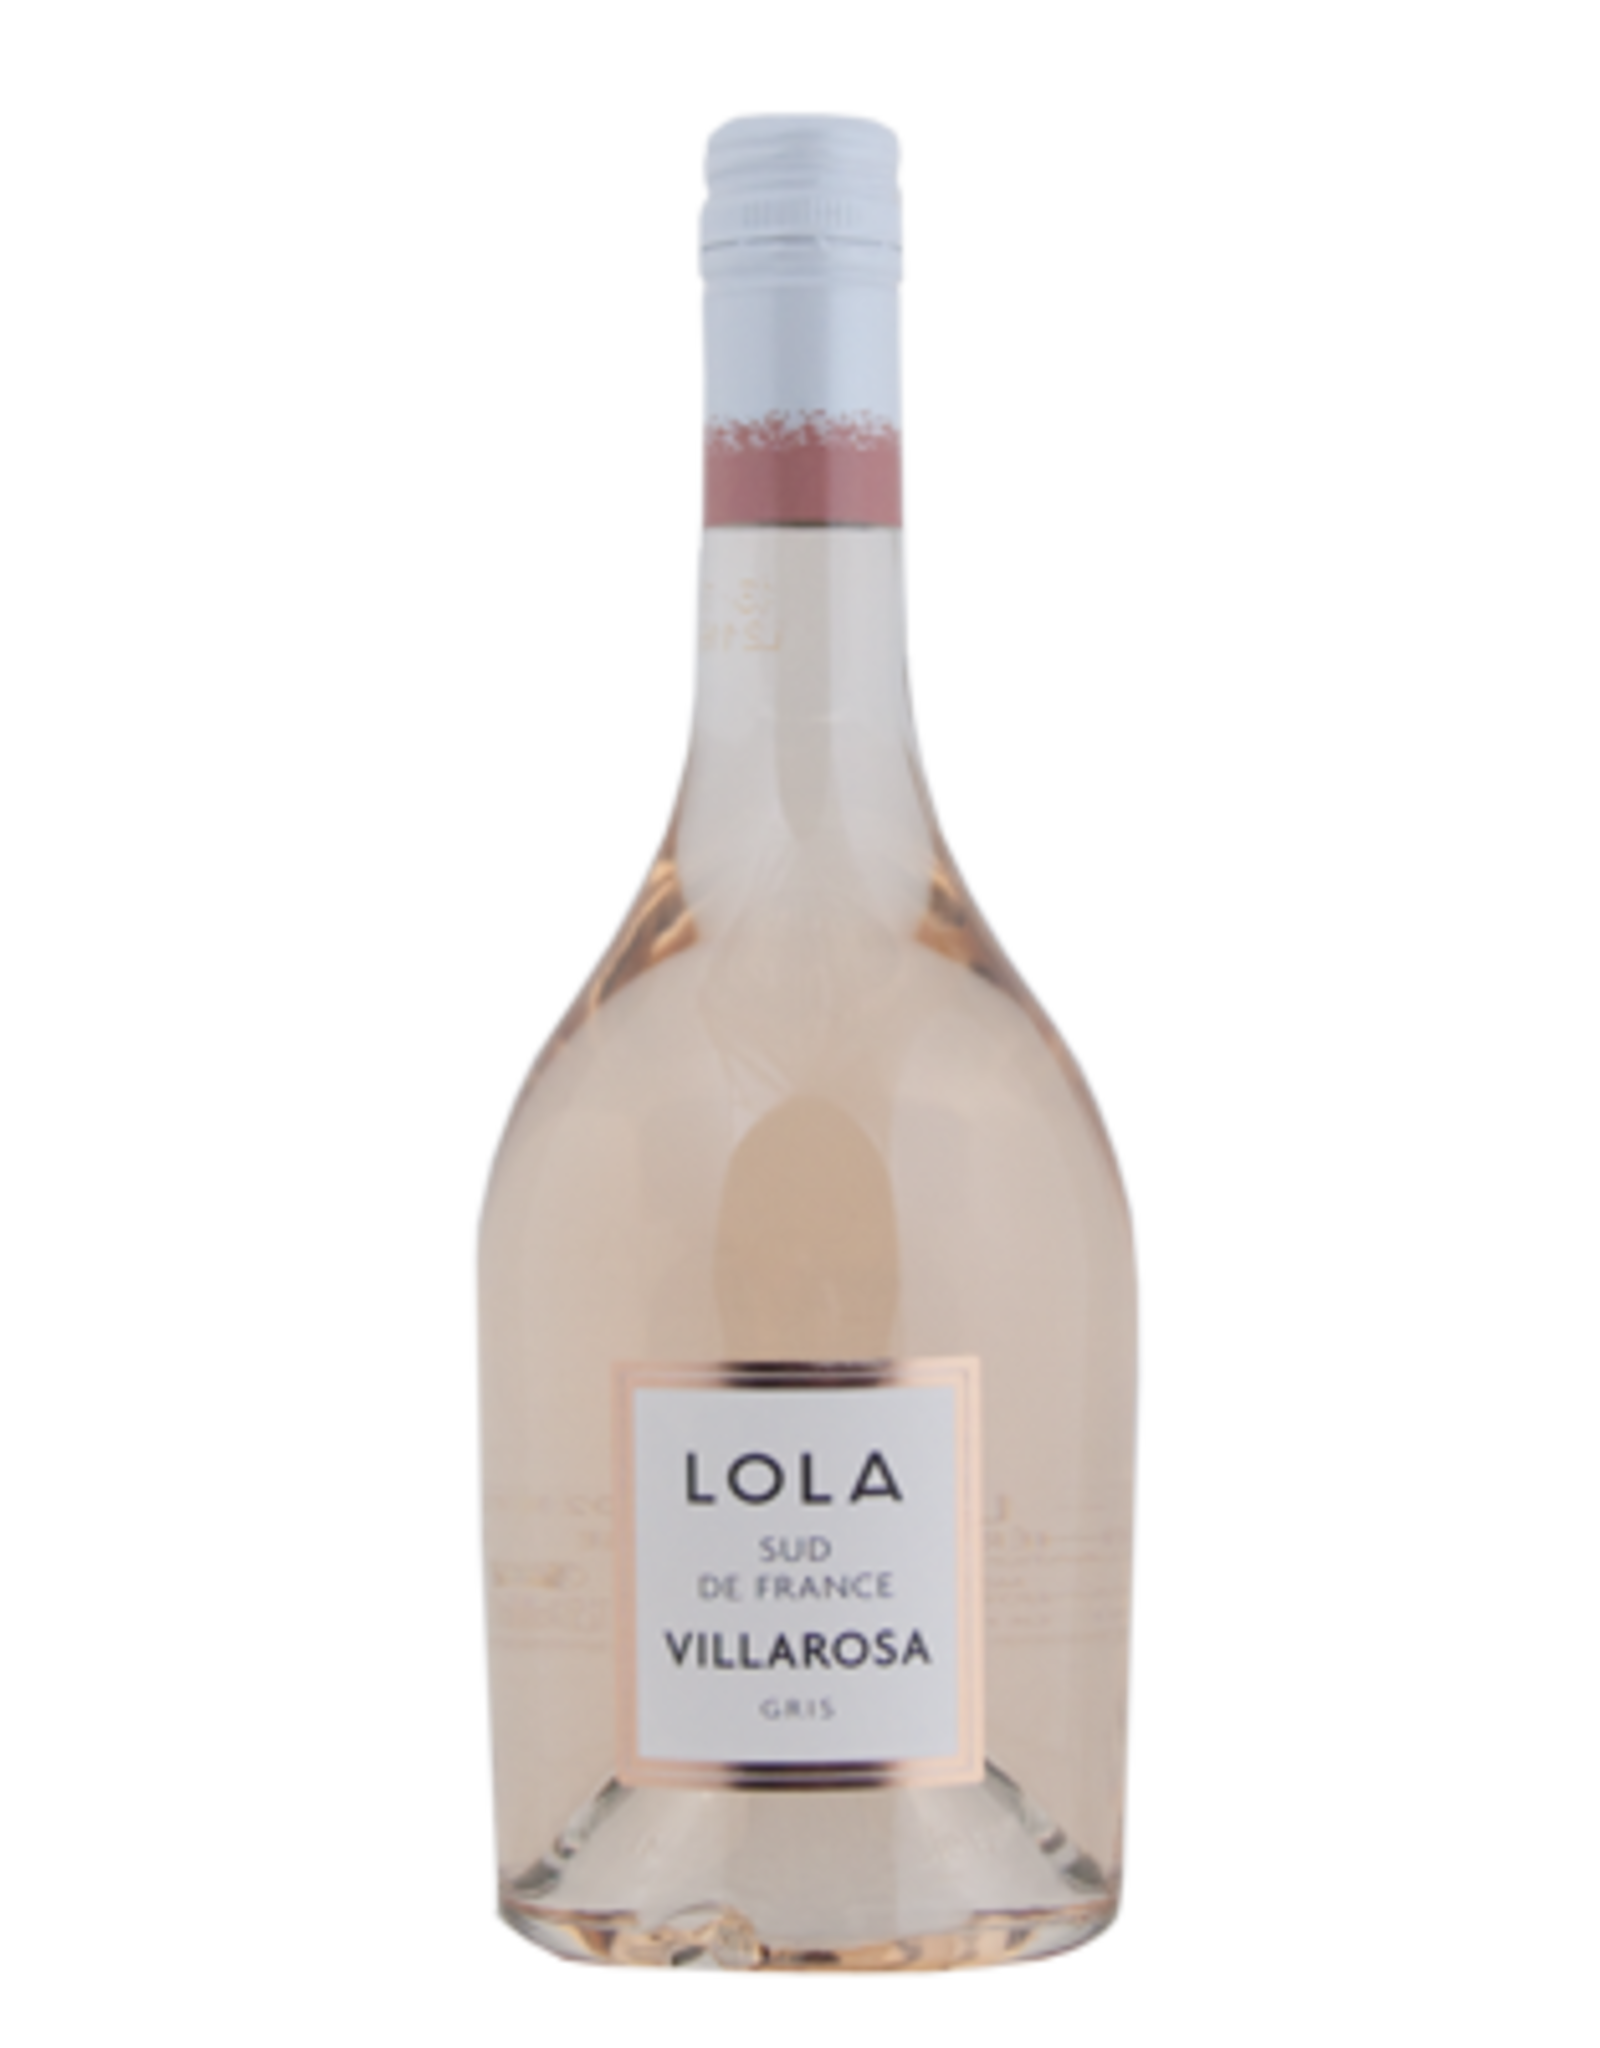 Lola Villarosa Sud de France Gris